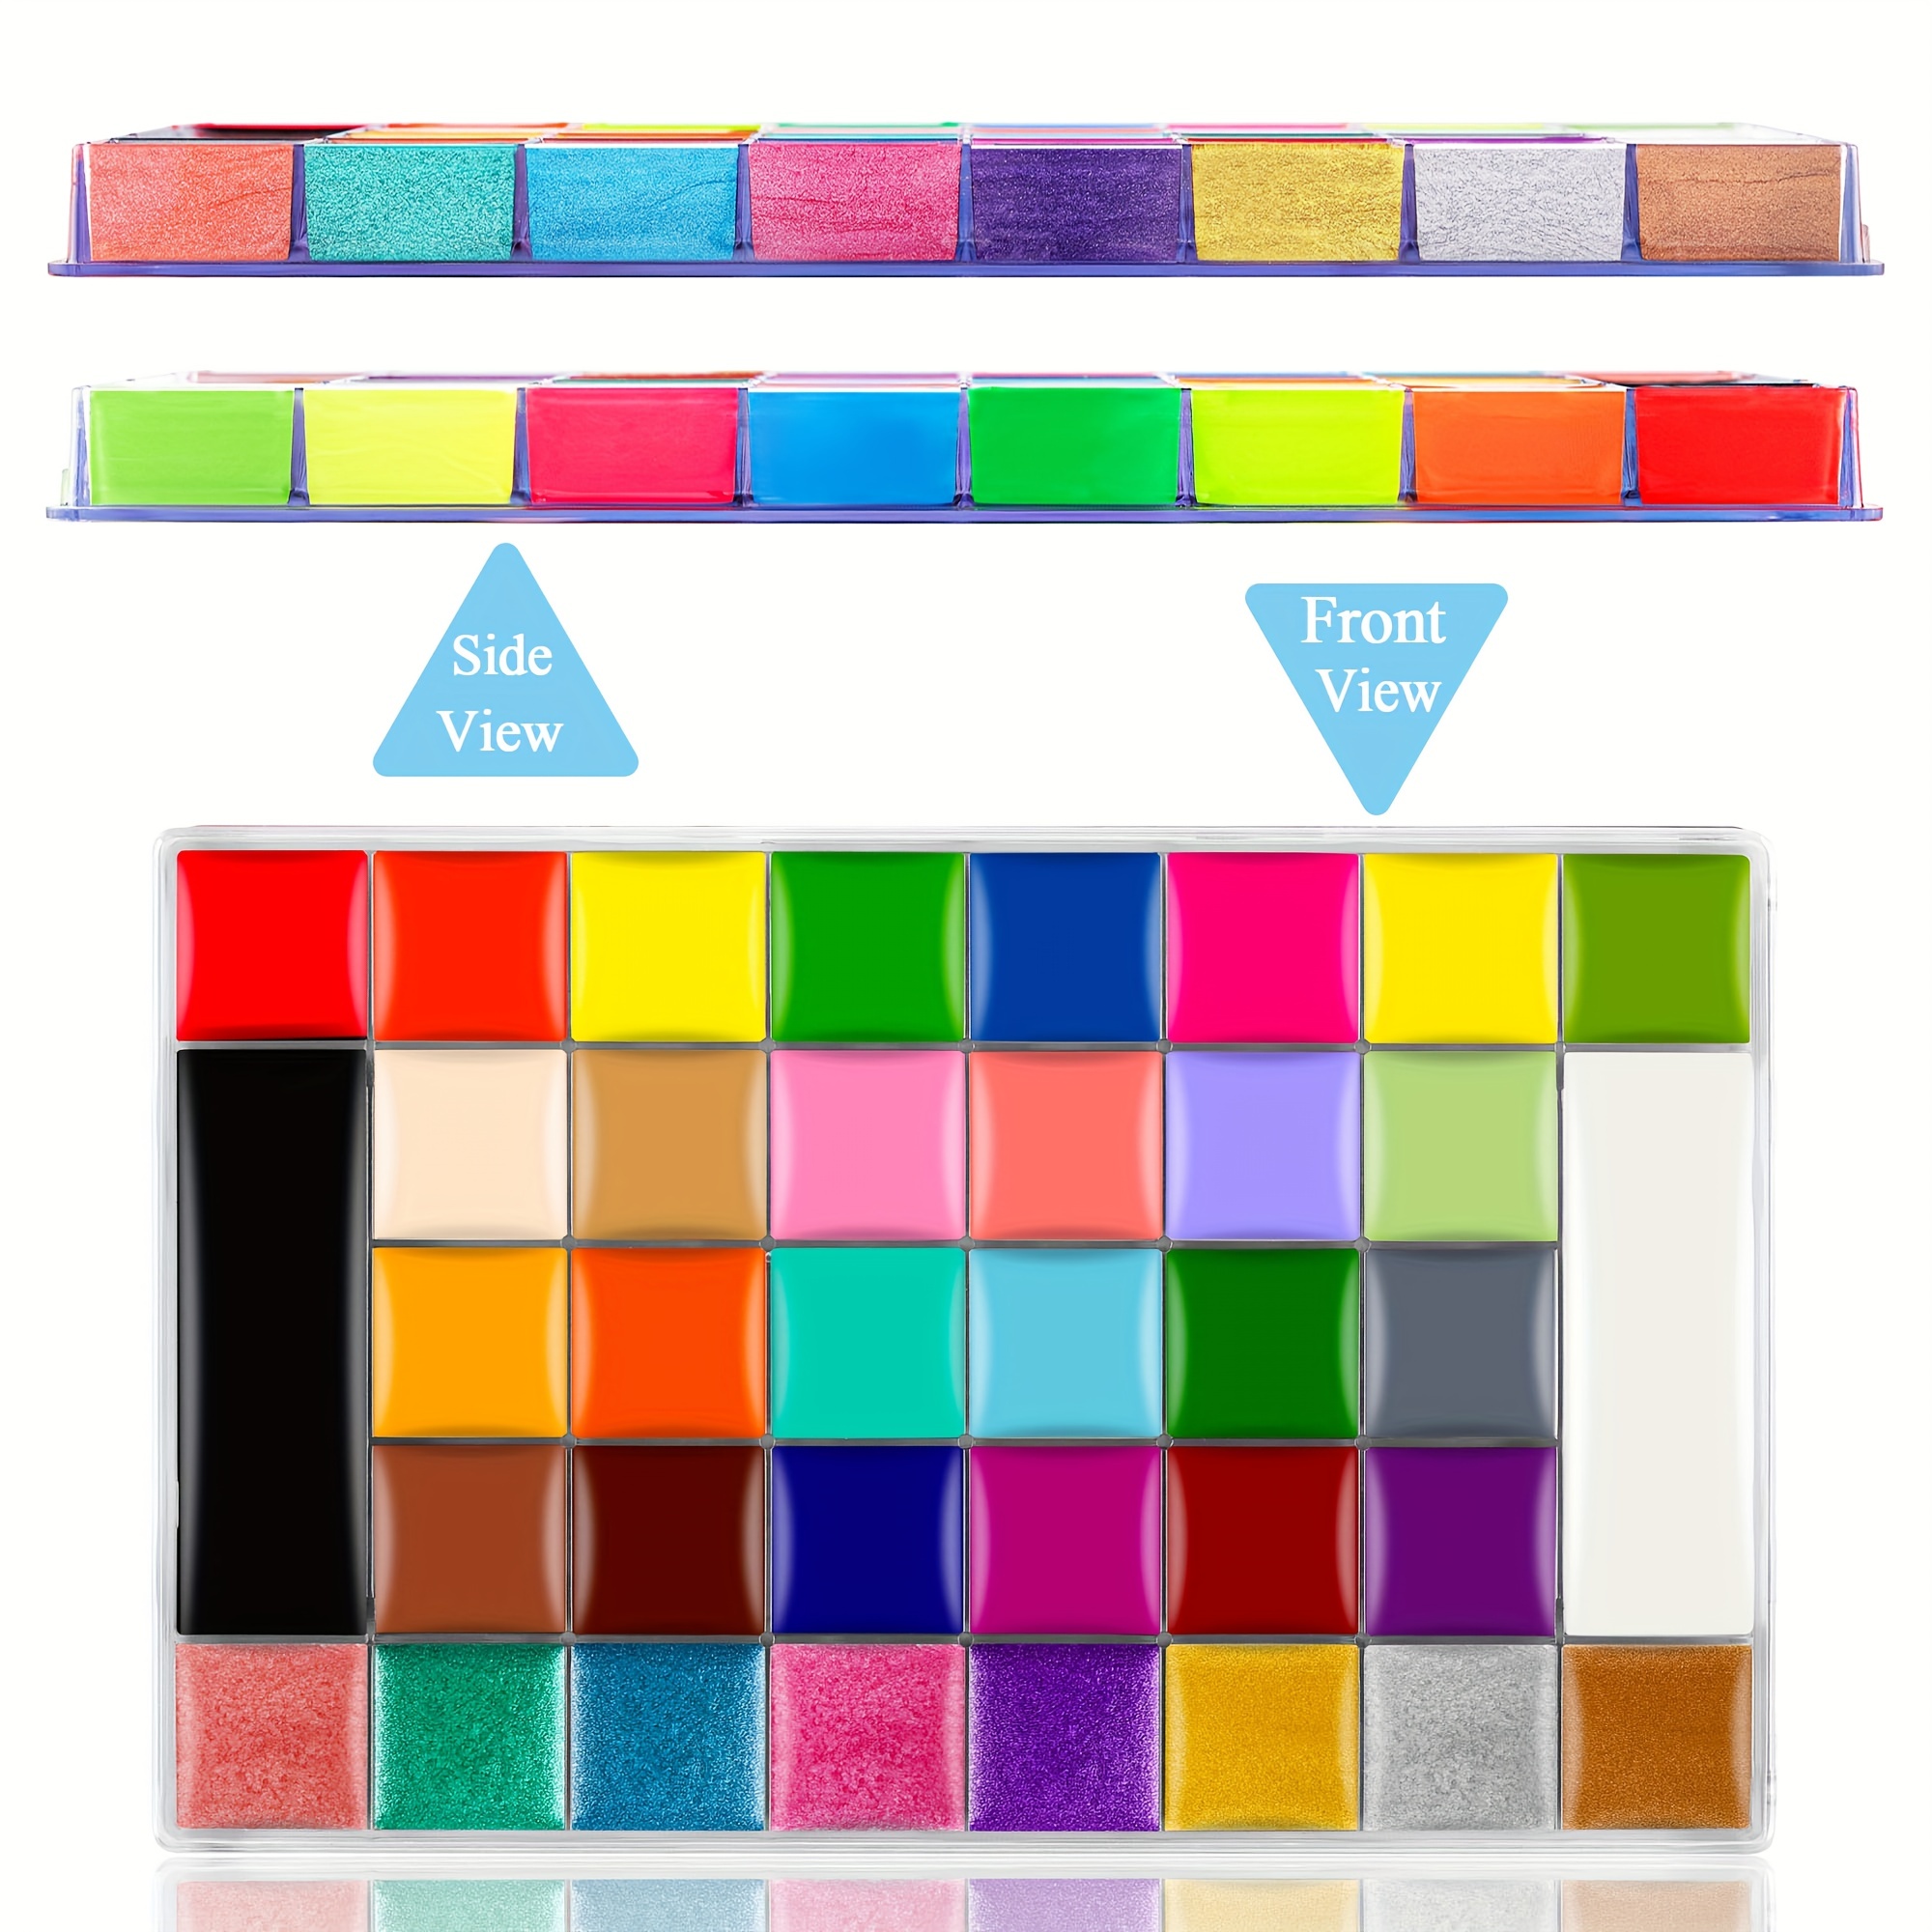 Professional 36 Colors Face Body Paint Kit - Temu